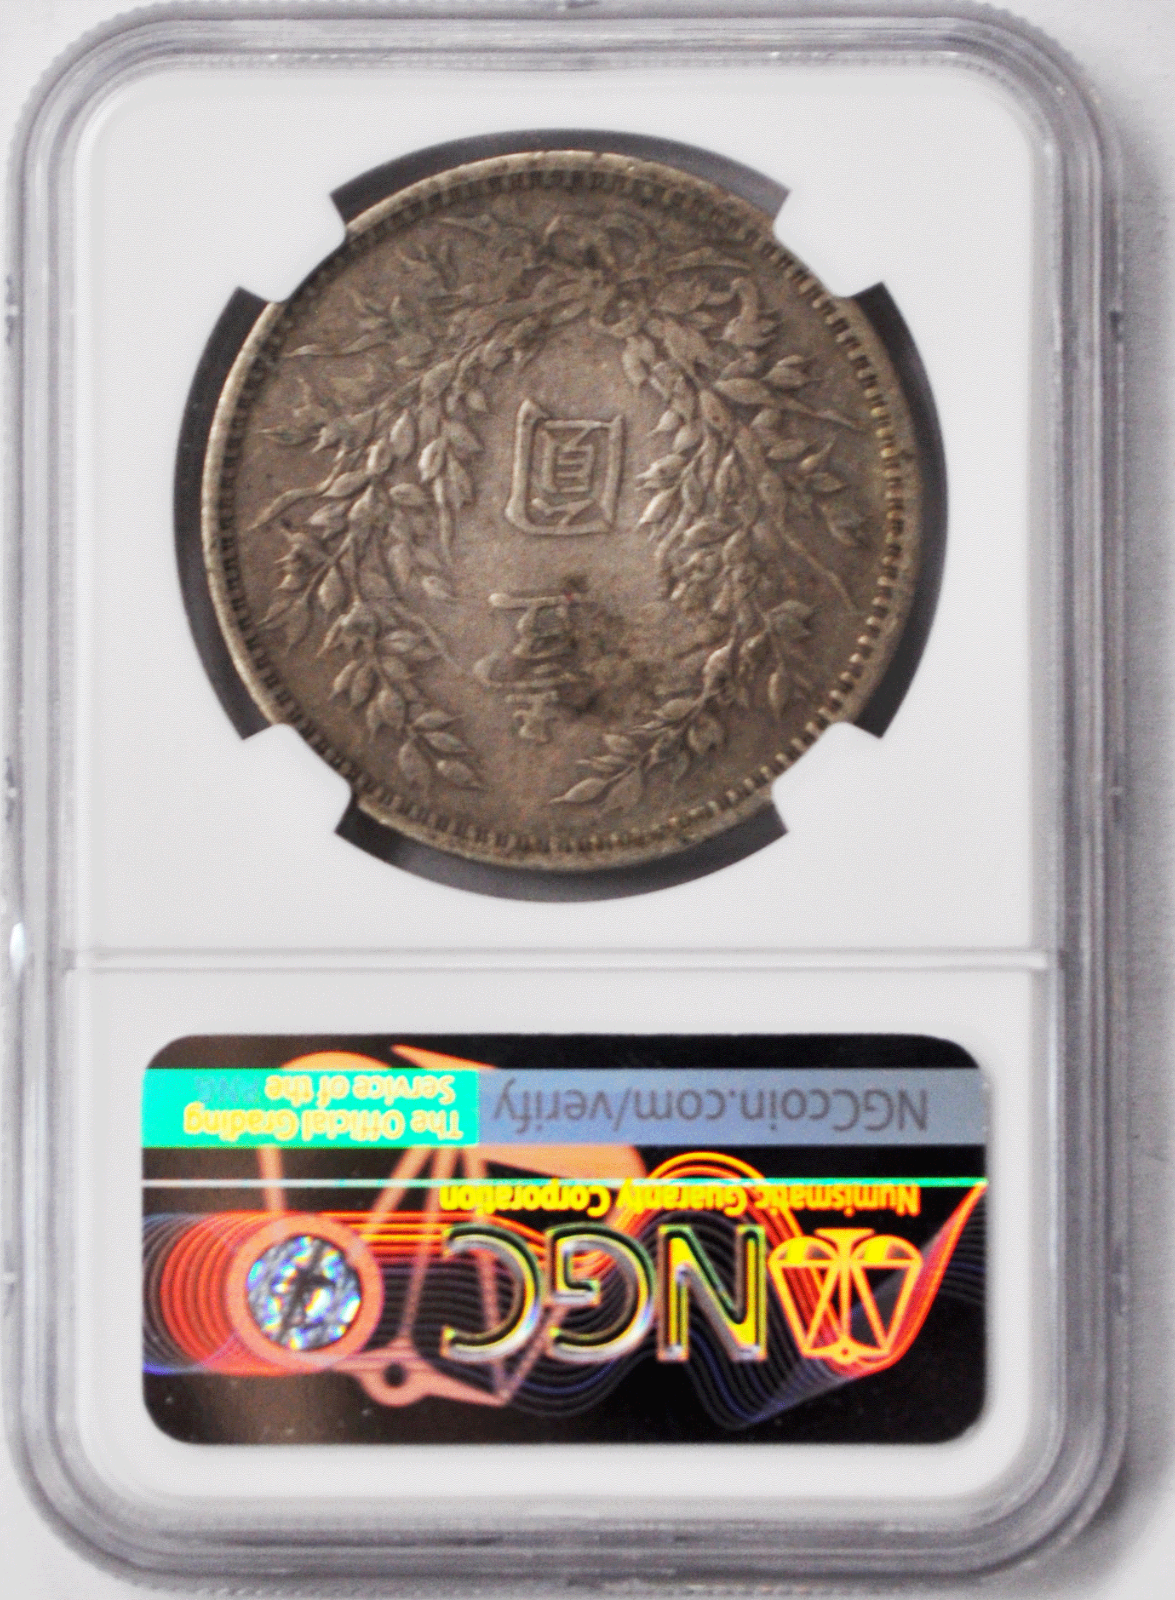 1934 China $1 Silver Dollar Chihli. Kuang-hsü Year 34  NGC AU50